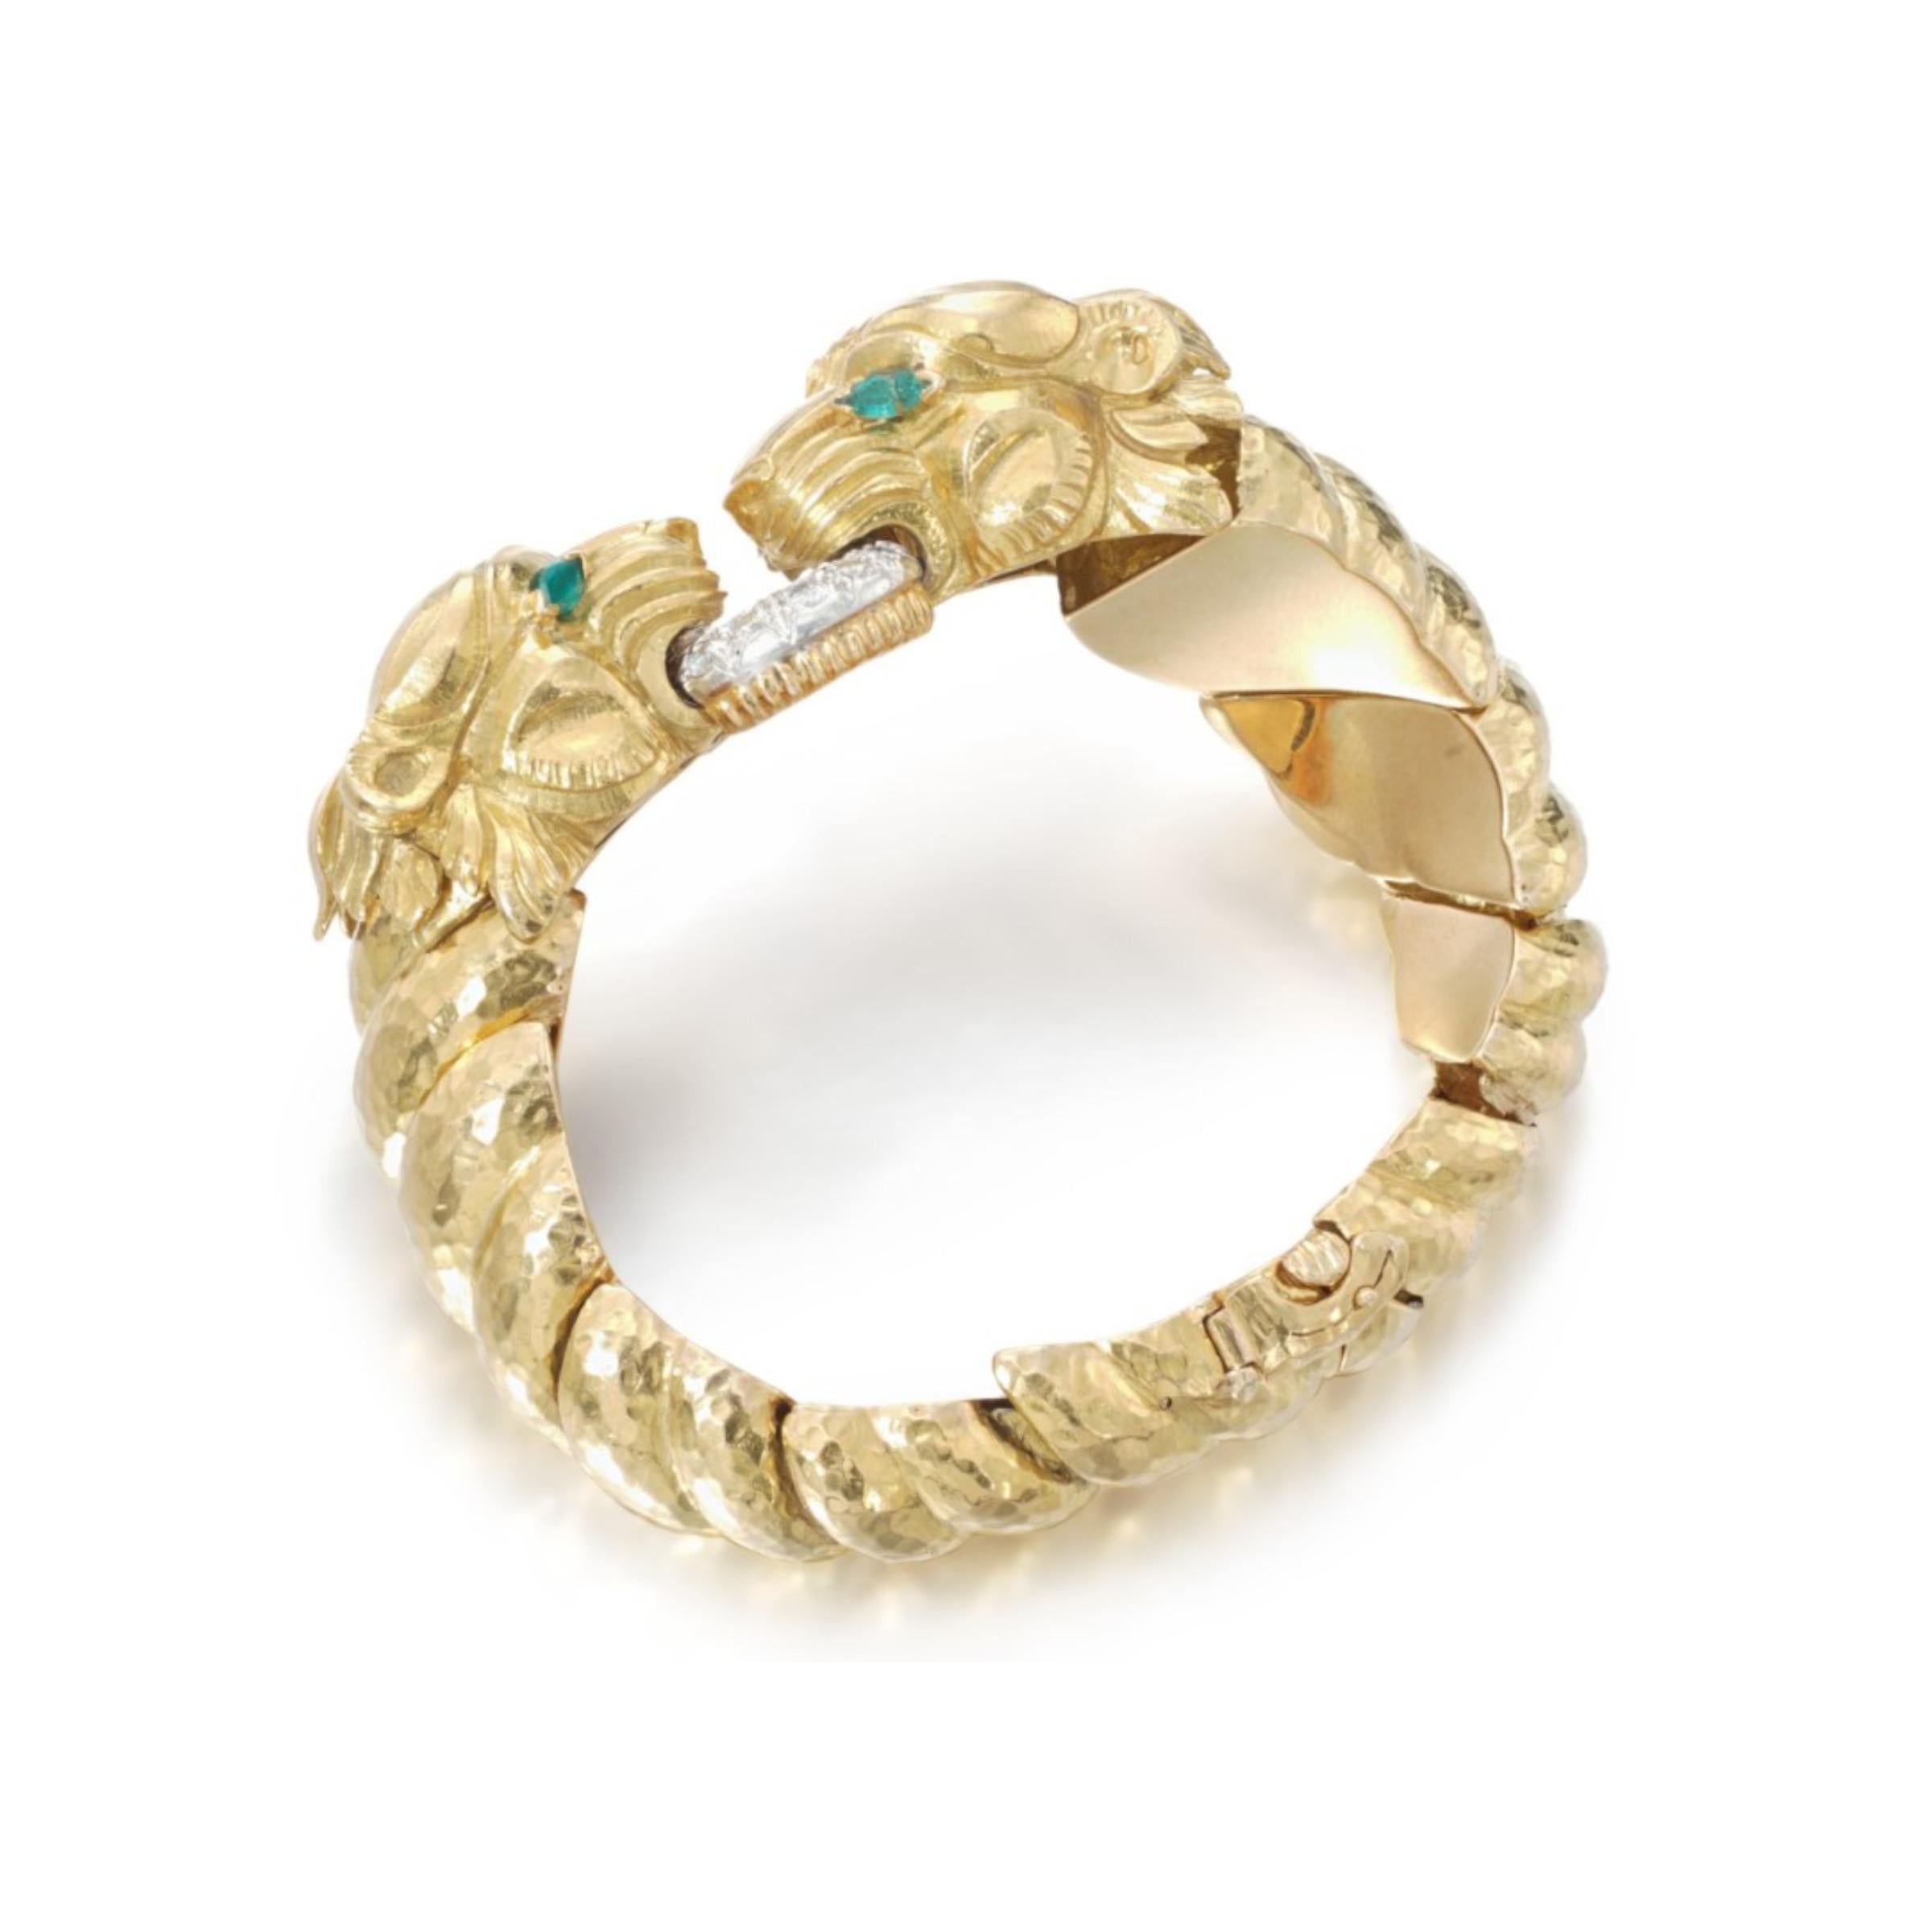 David Webb Lion Emerald Diamond & Gold Bracelet

18k Gold

Signed David Webb

Length: approximately 7 inches